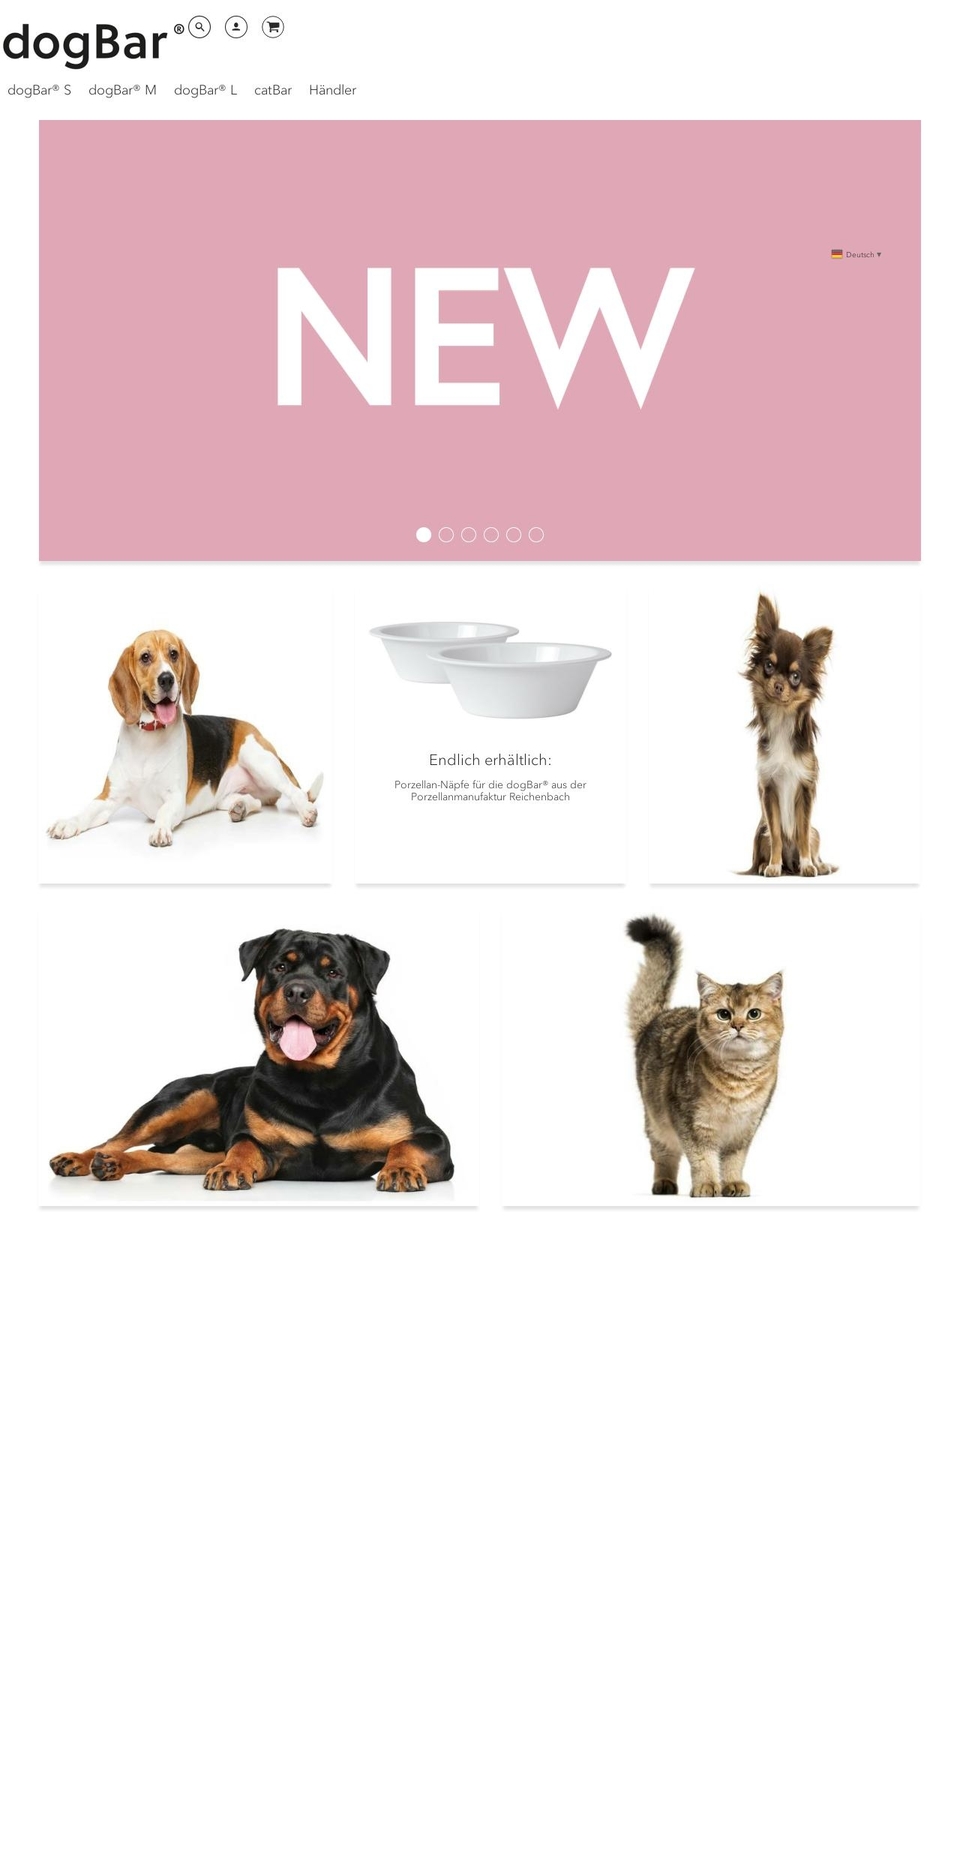 Wokiee Shopify theme site example dogbar.de